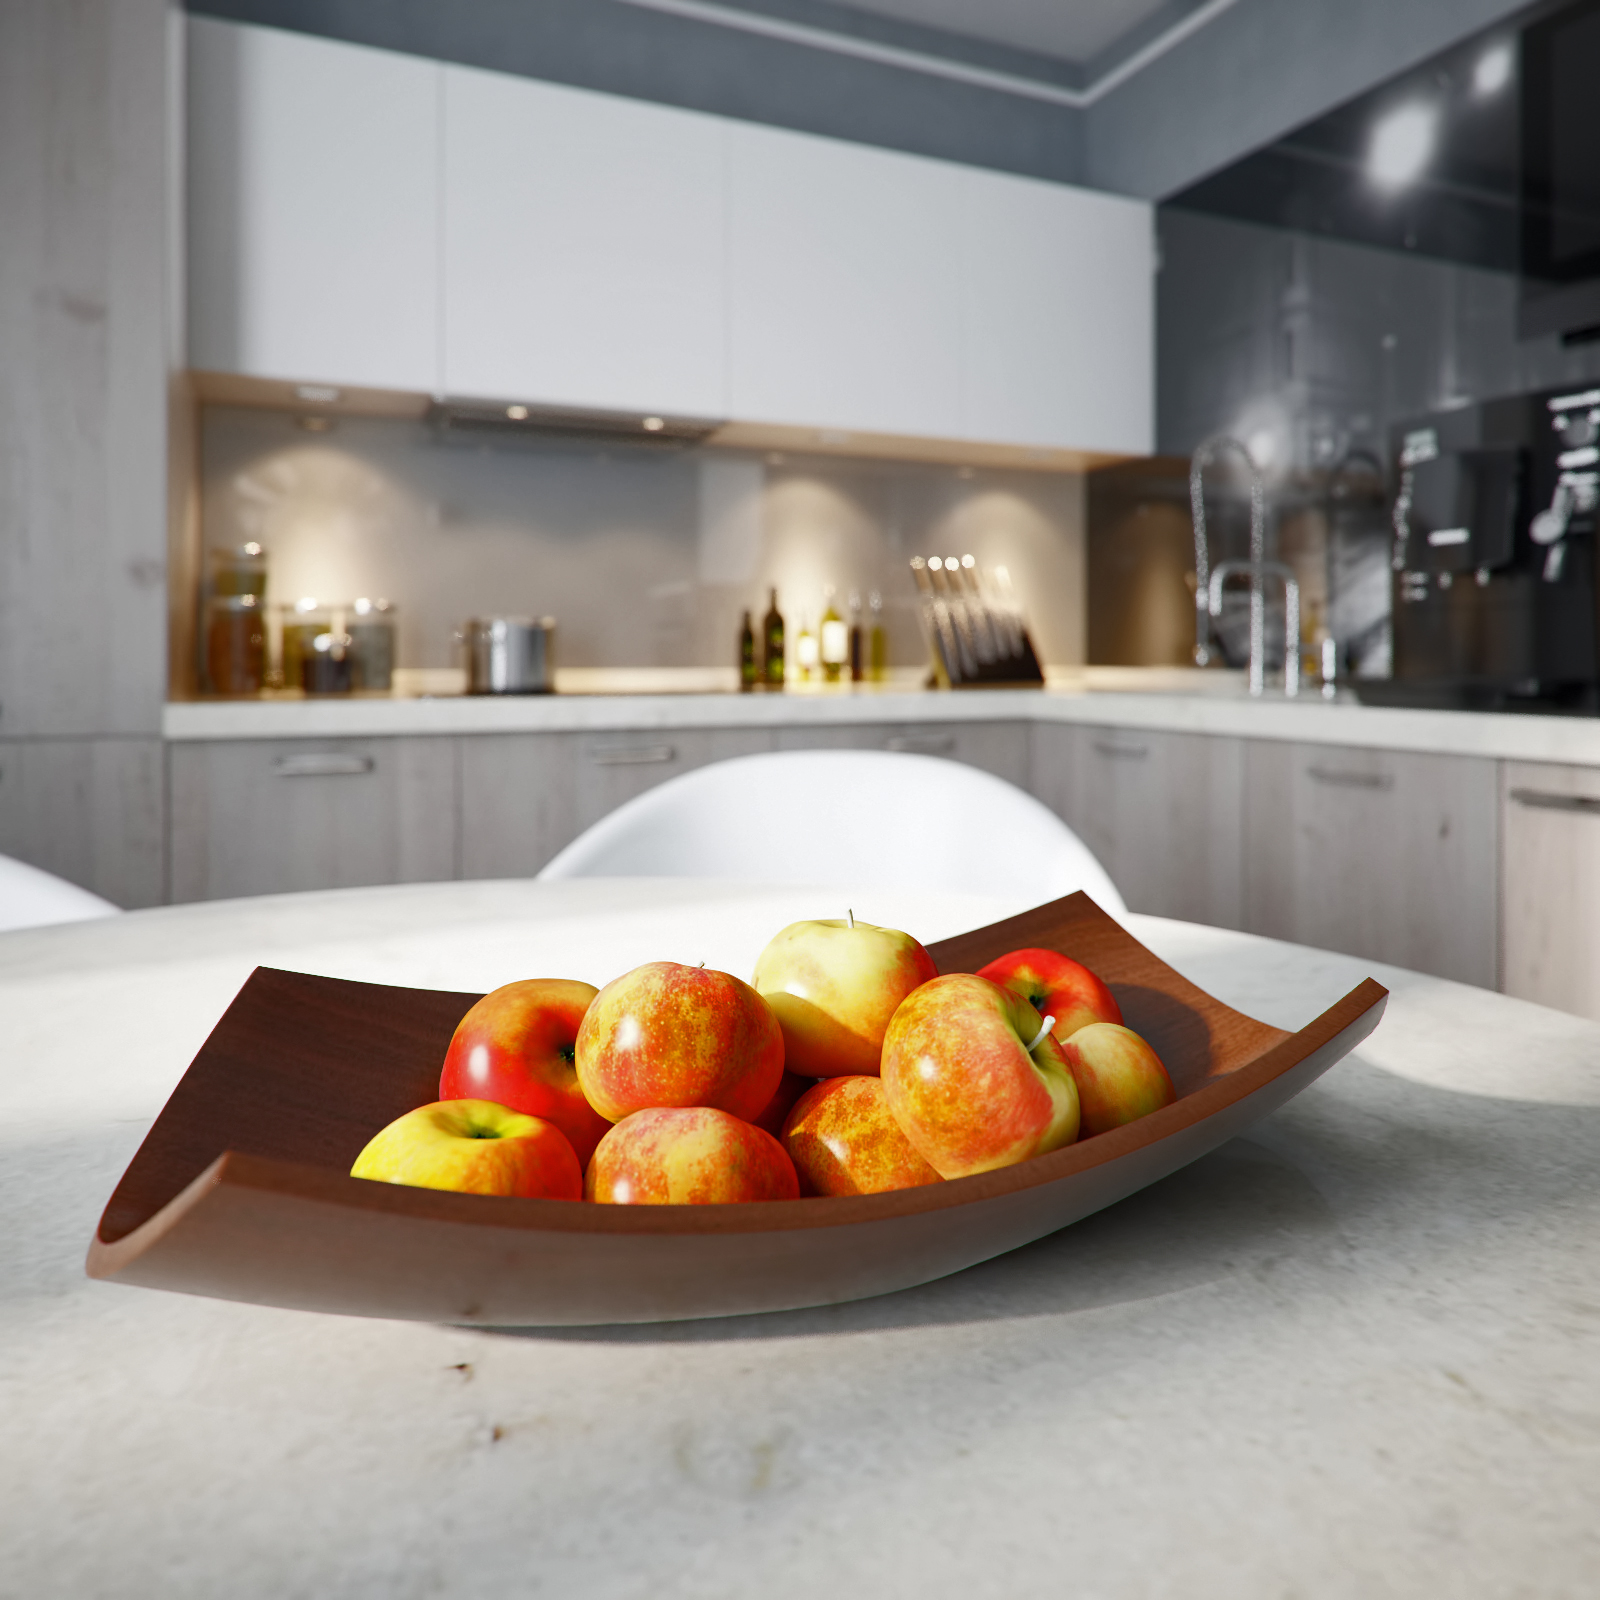 https://www.home-designing.com/wp-content/uploads/2013/12/14-Modern-fruit-bowl.jpg